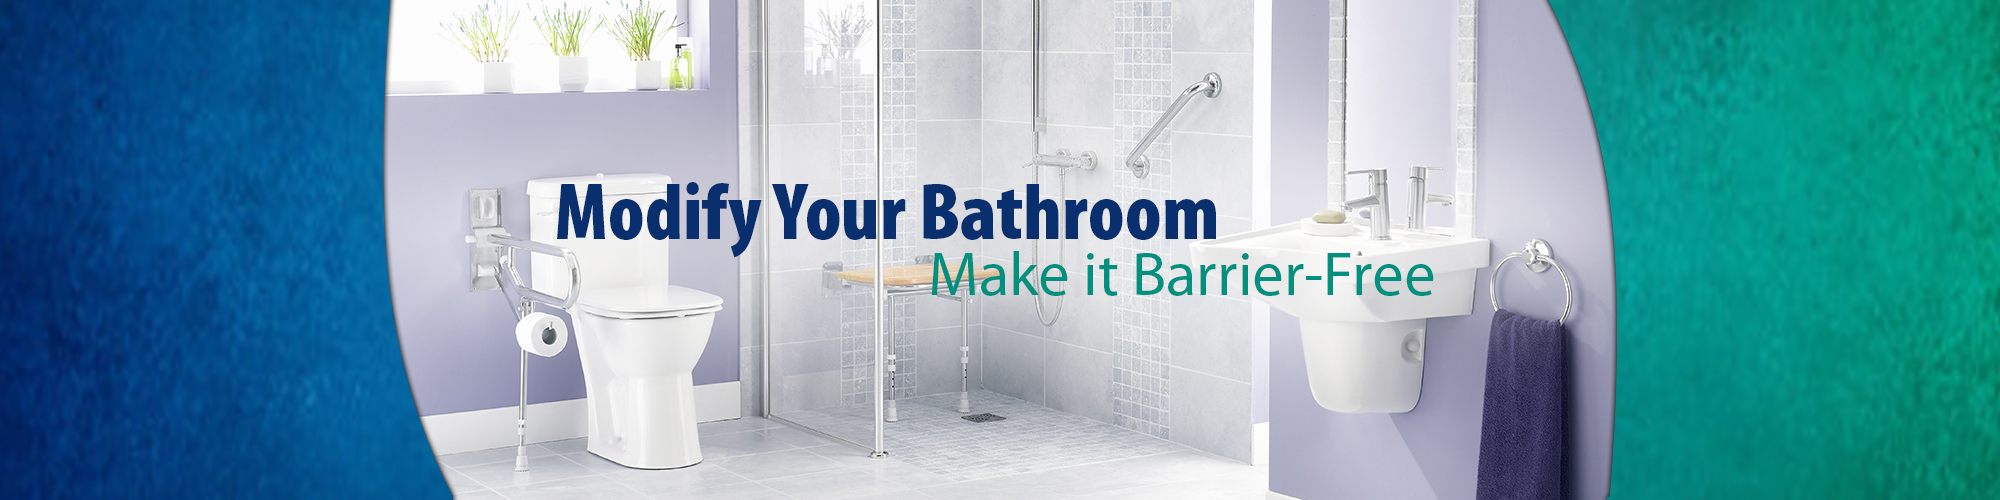 Modify your Bathroom - Make it Barrier Free